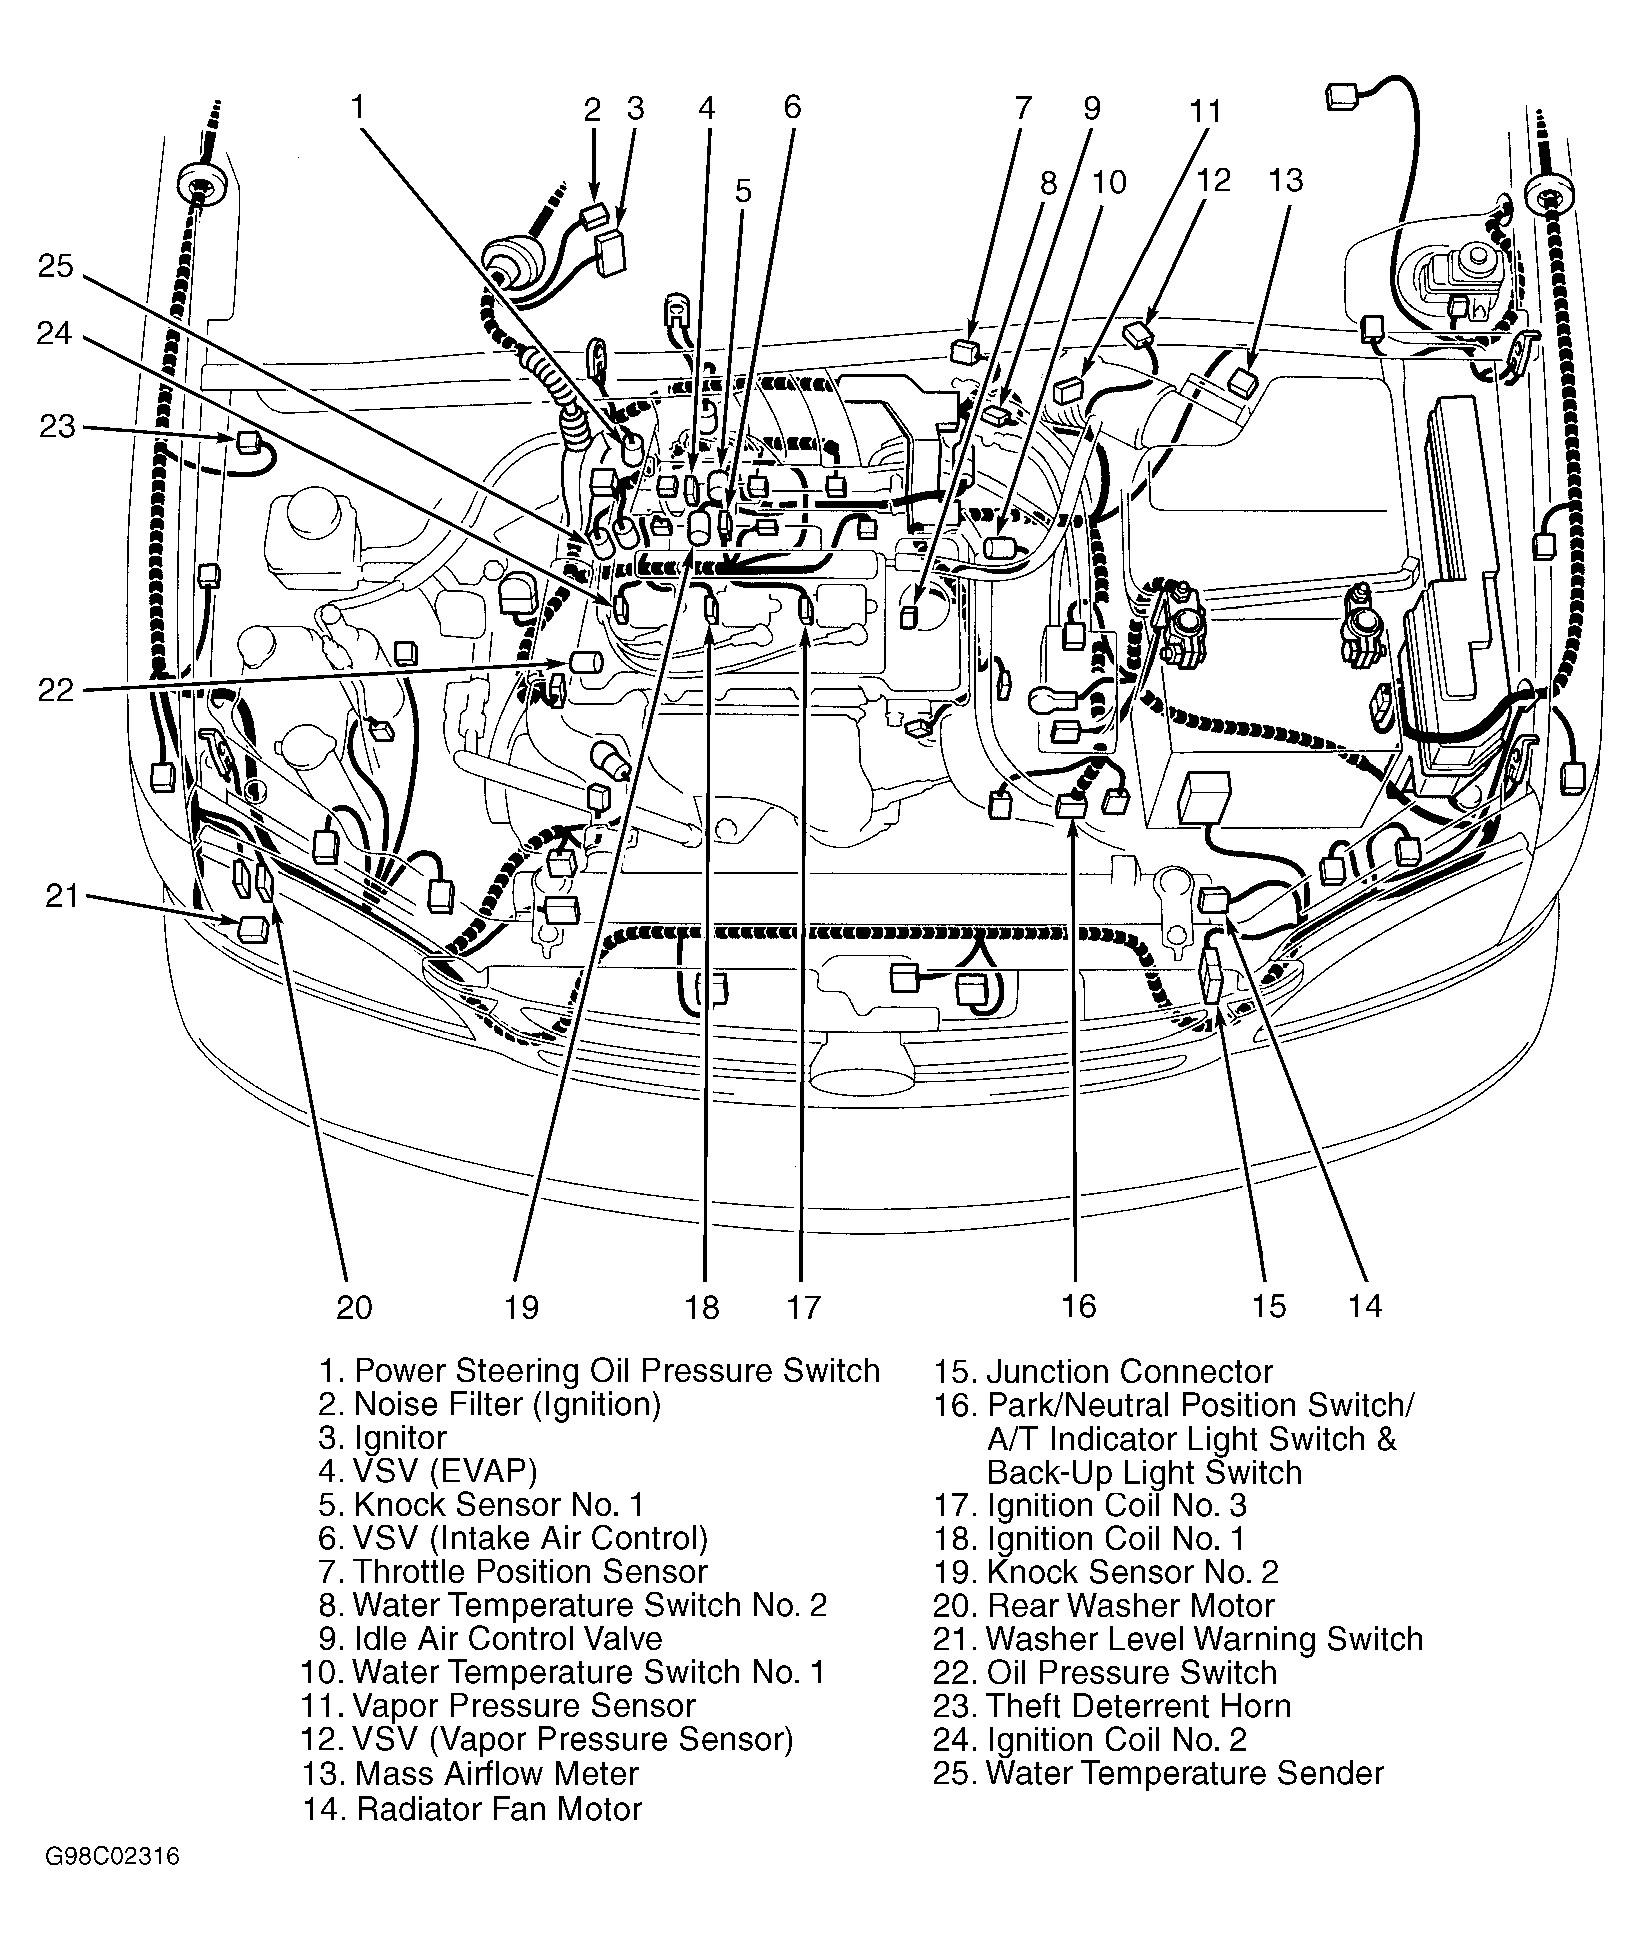 1997 Toyota Avalon Stereo Wiring Diagram from detoxicrecenze.com